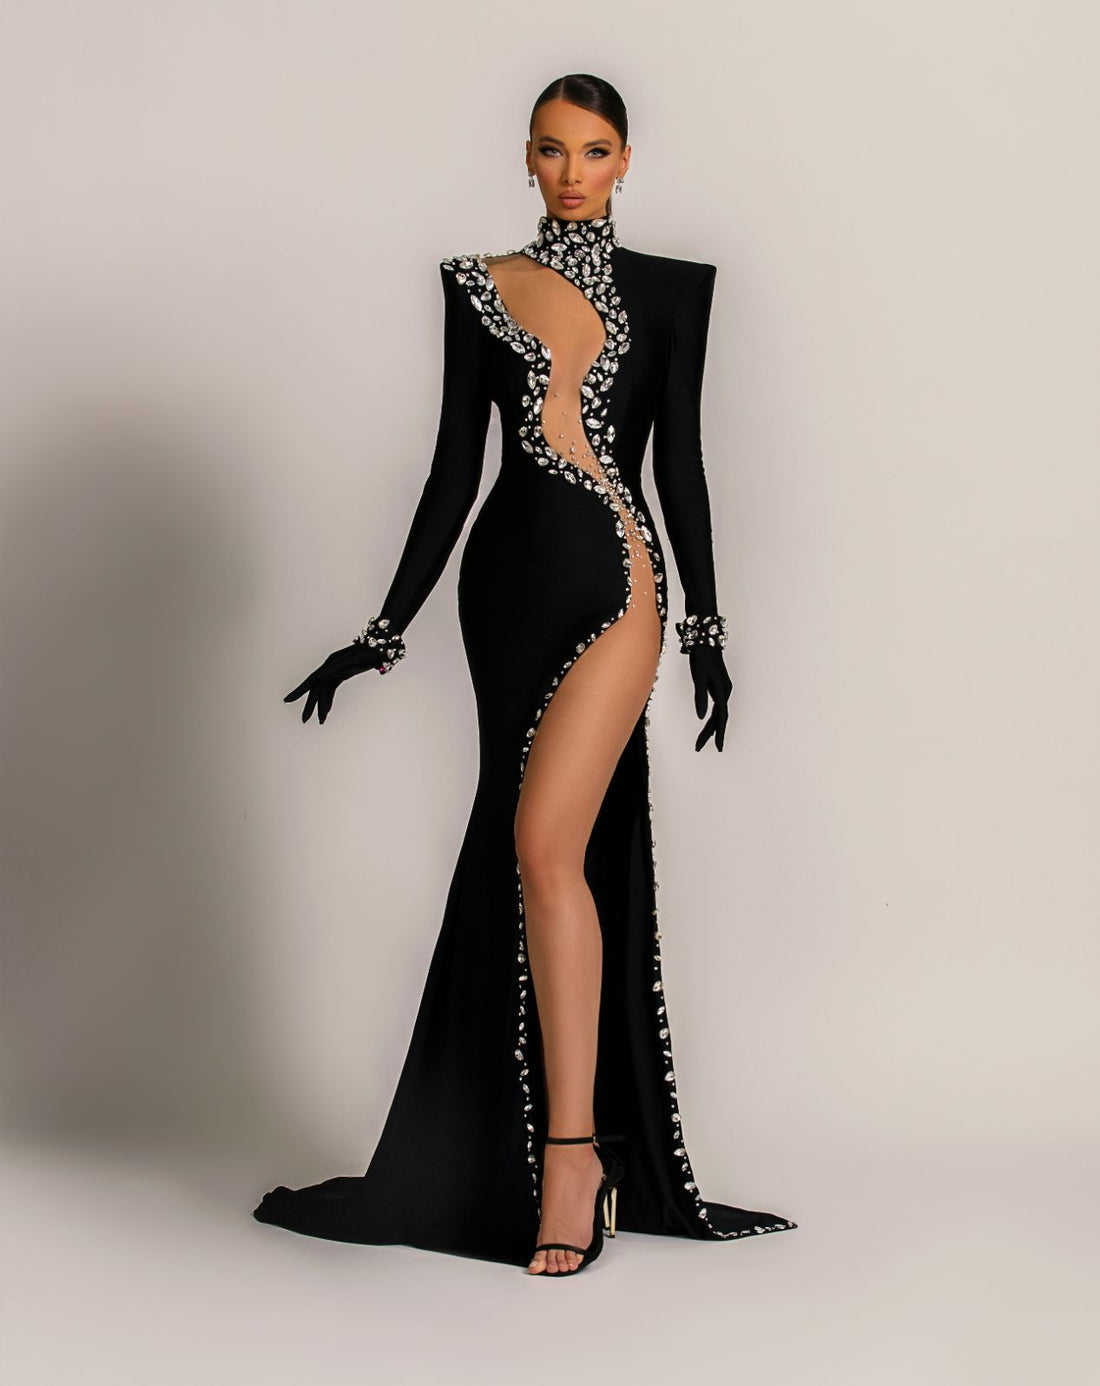 Christina Elegant Long Sleeves With Gloves Black Evening Dress